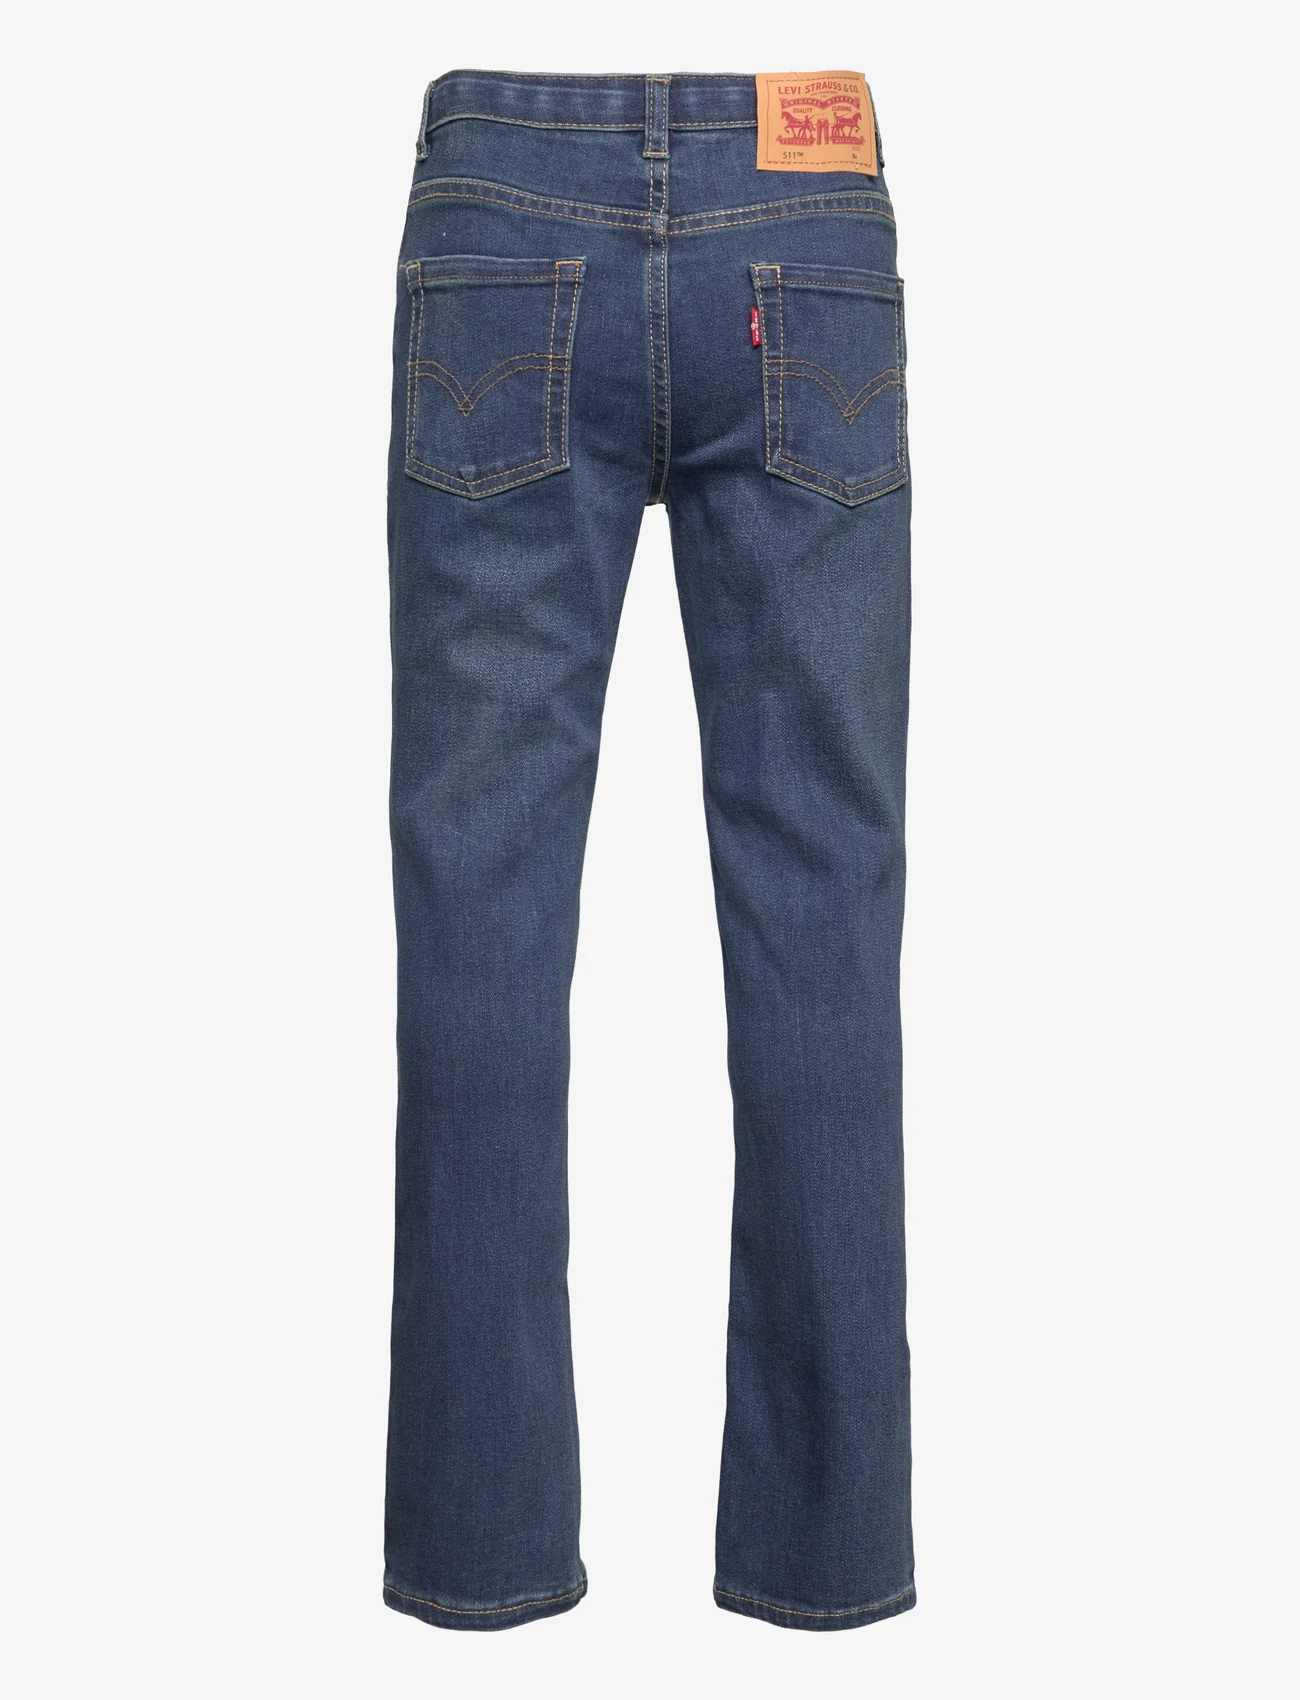 Levi's - Levi's® 511™ Slim Fit Eco Performance Jeans - regular jeans - blue - 1